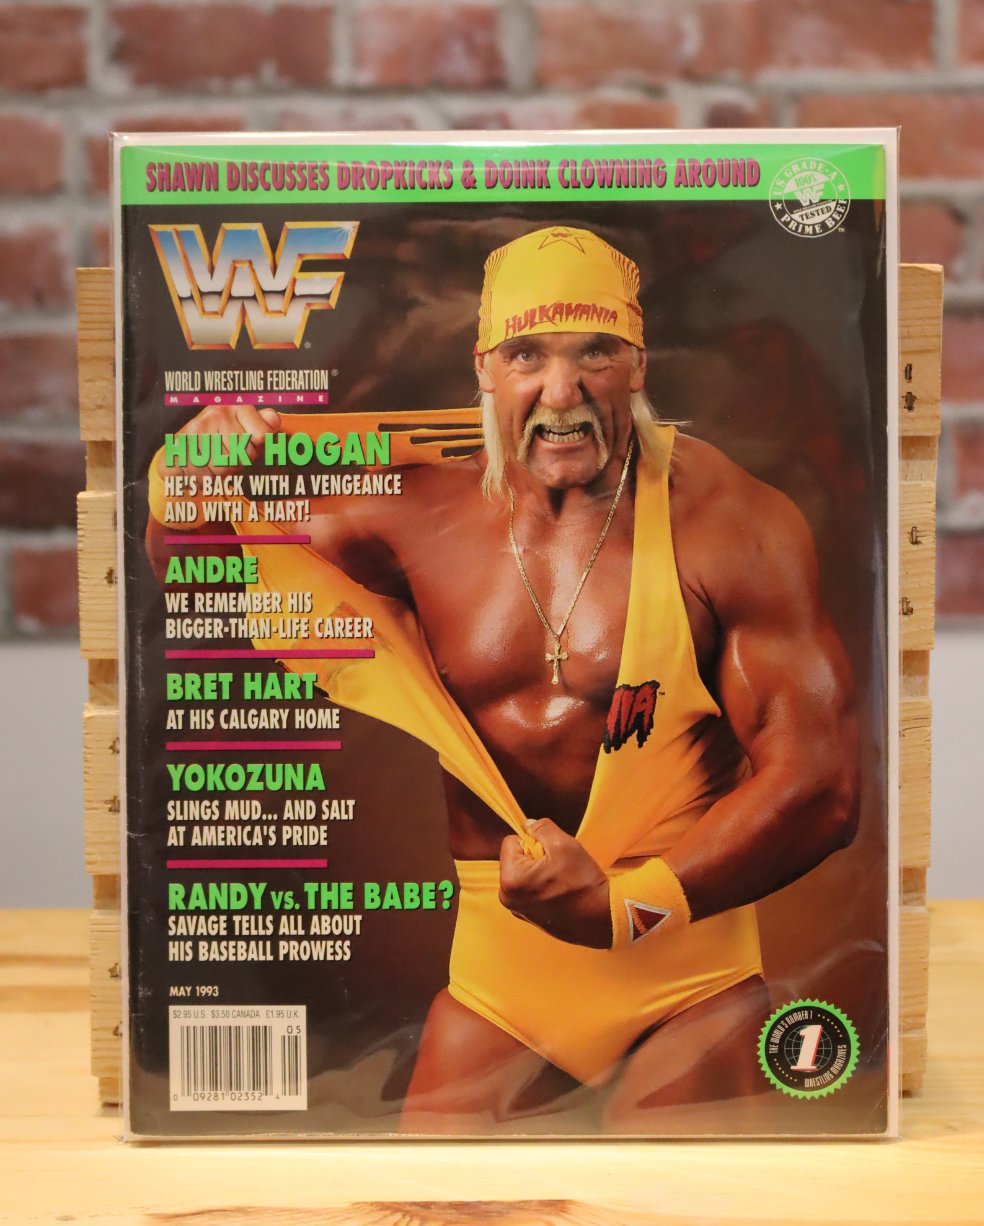 Original WWF WWE Vintage Wrestling Magazine Hulk Hogan (May 1993)